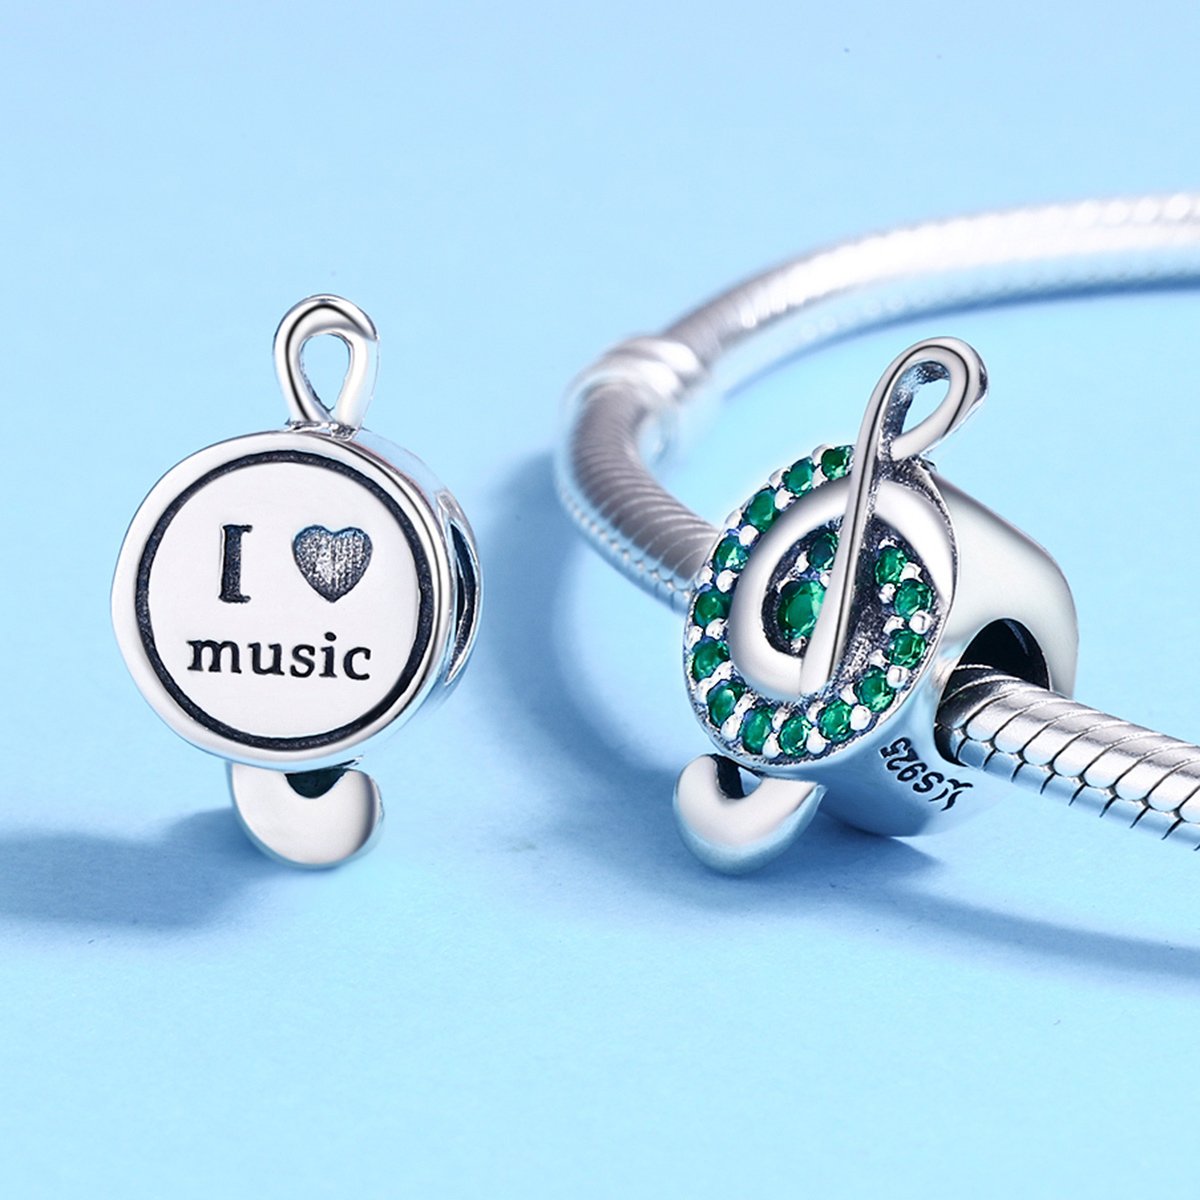 Sterling 925 silver charm the I love music bead pendant fits Pandora charm and European charm bracelet Xaxe.com